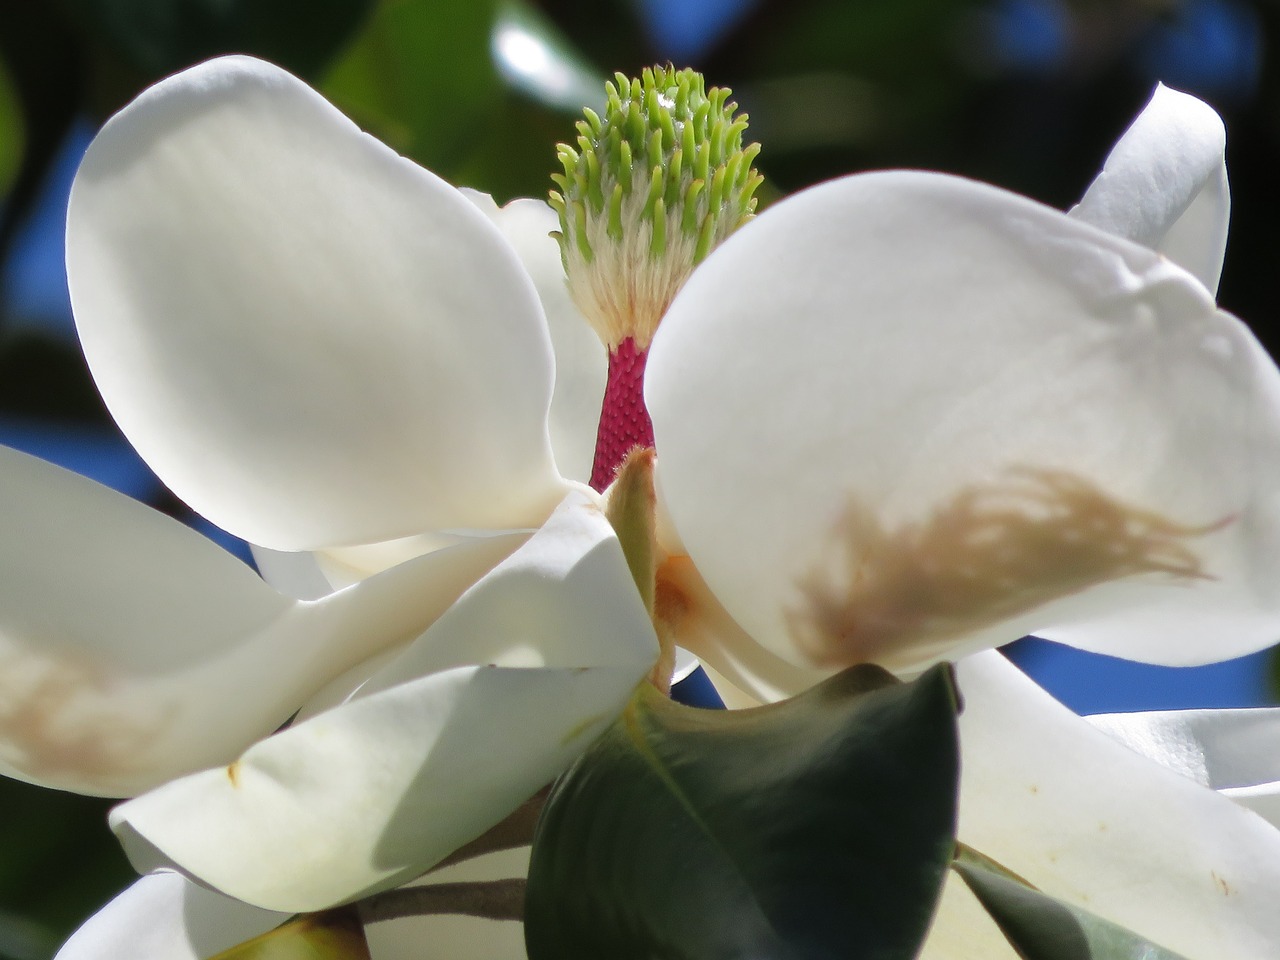 magnolia flower blossom free photo